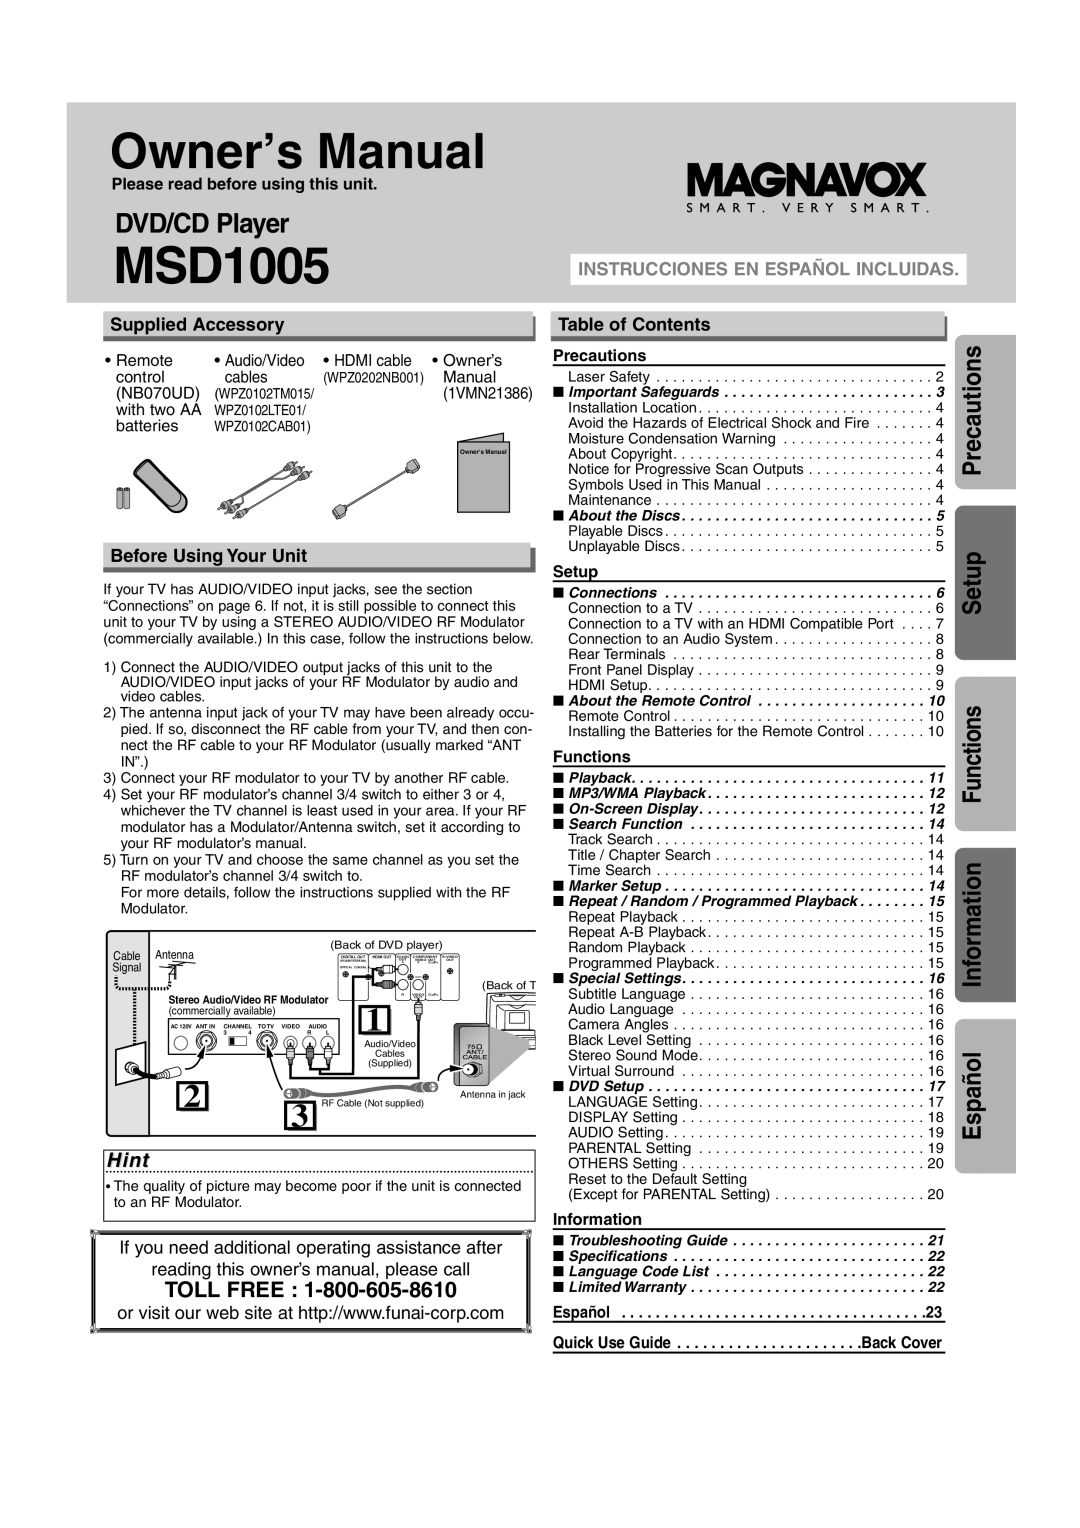 FUNAI MSD1005 owner manual Precautions, Setup, Information, Español, Toll Free, Functions, Owner’s Manual, DVD/CD Player 